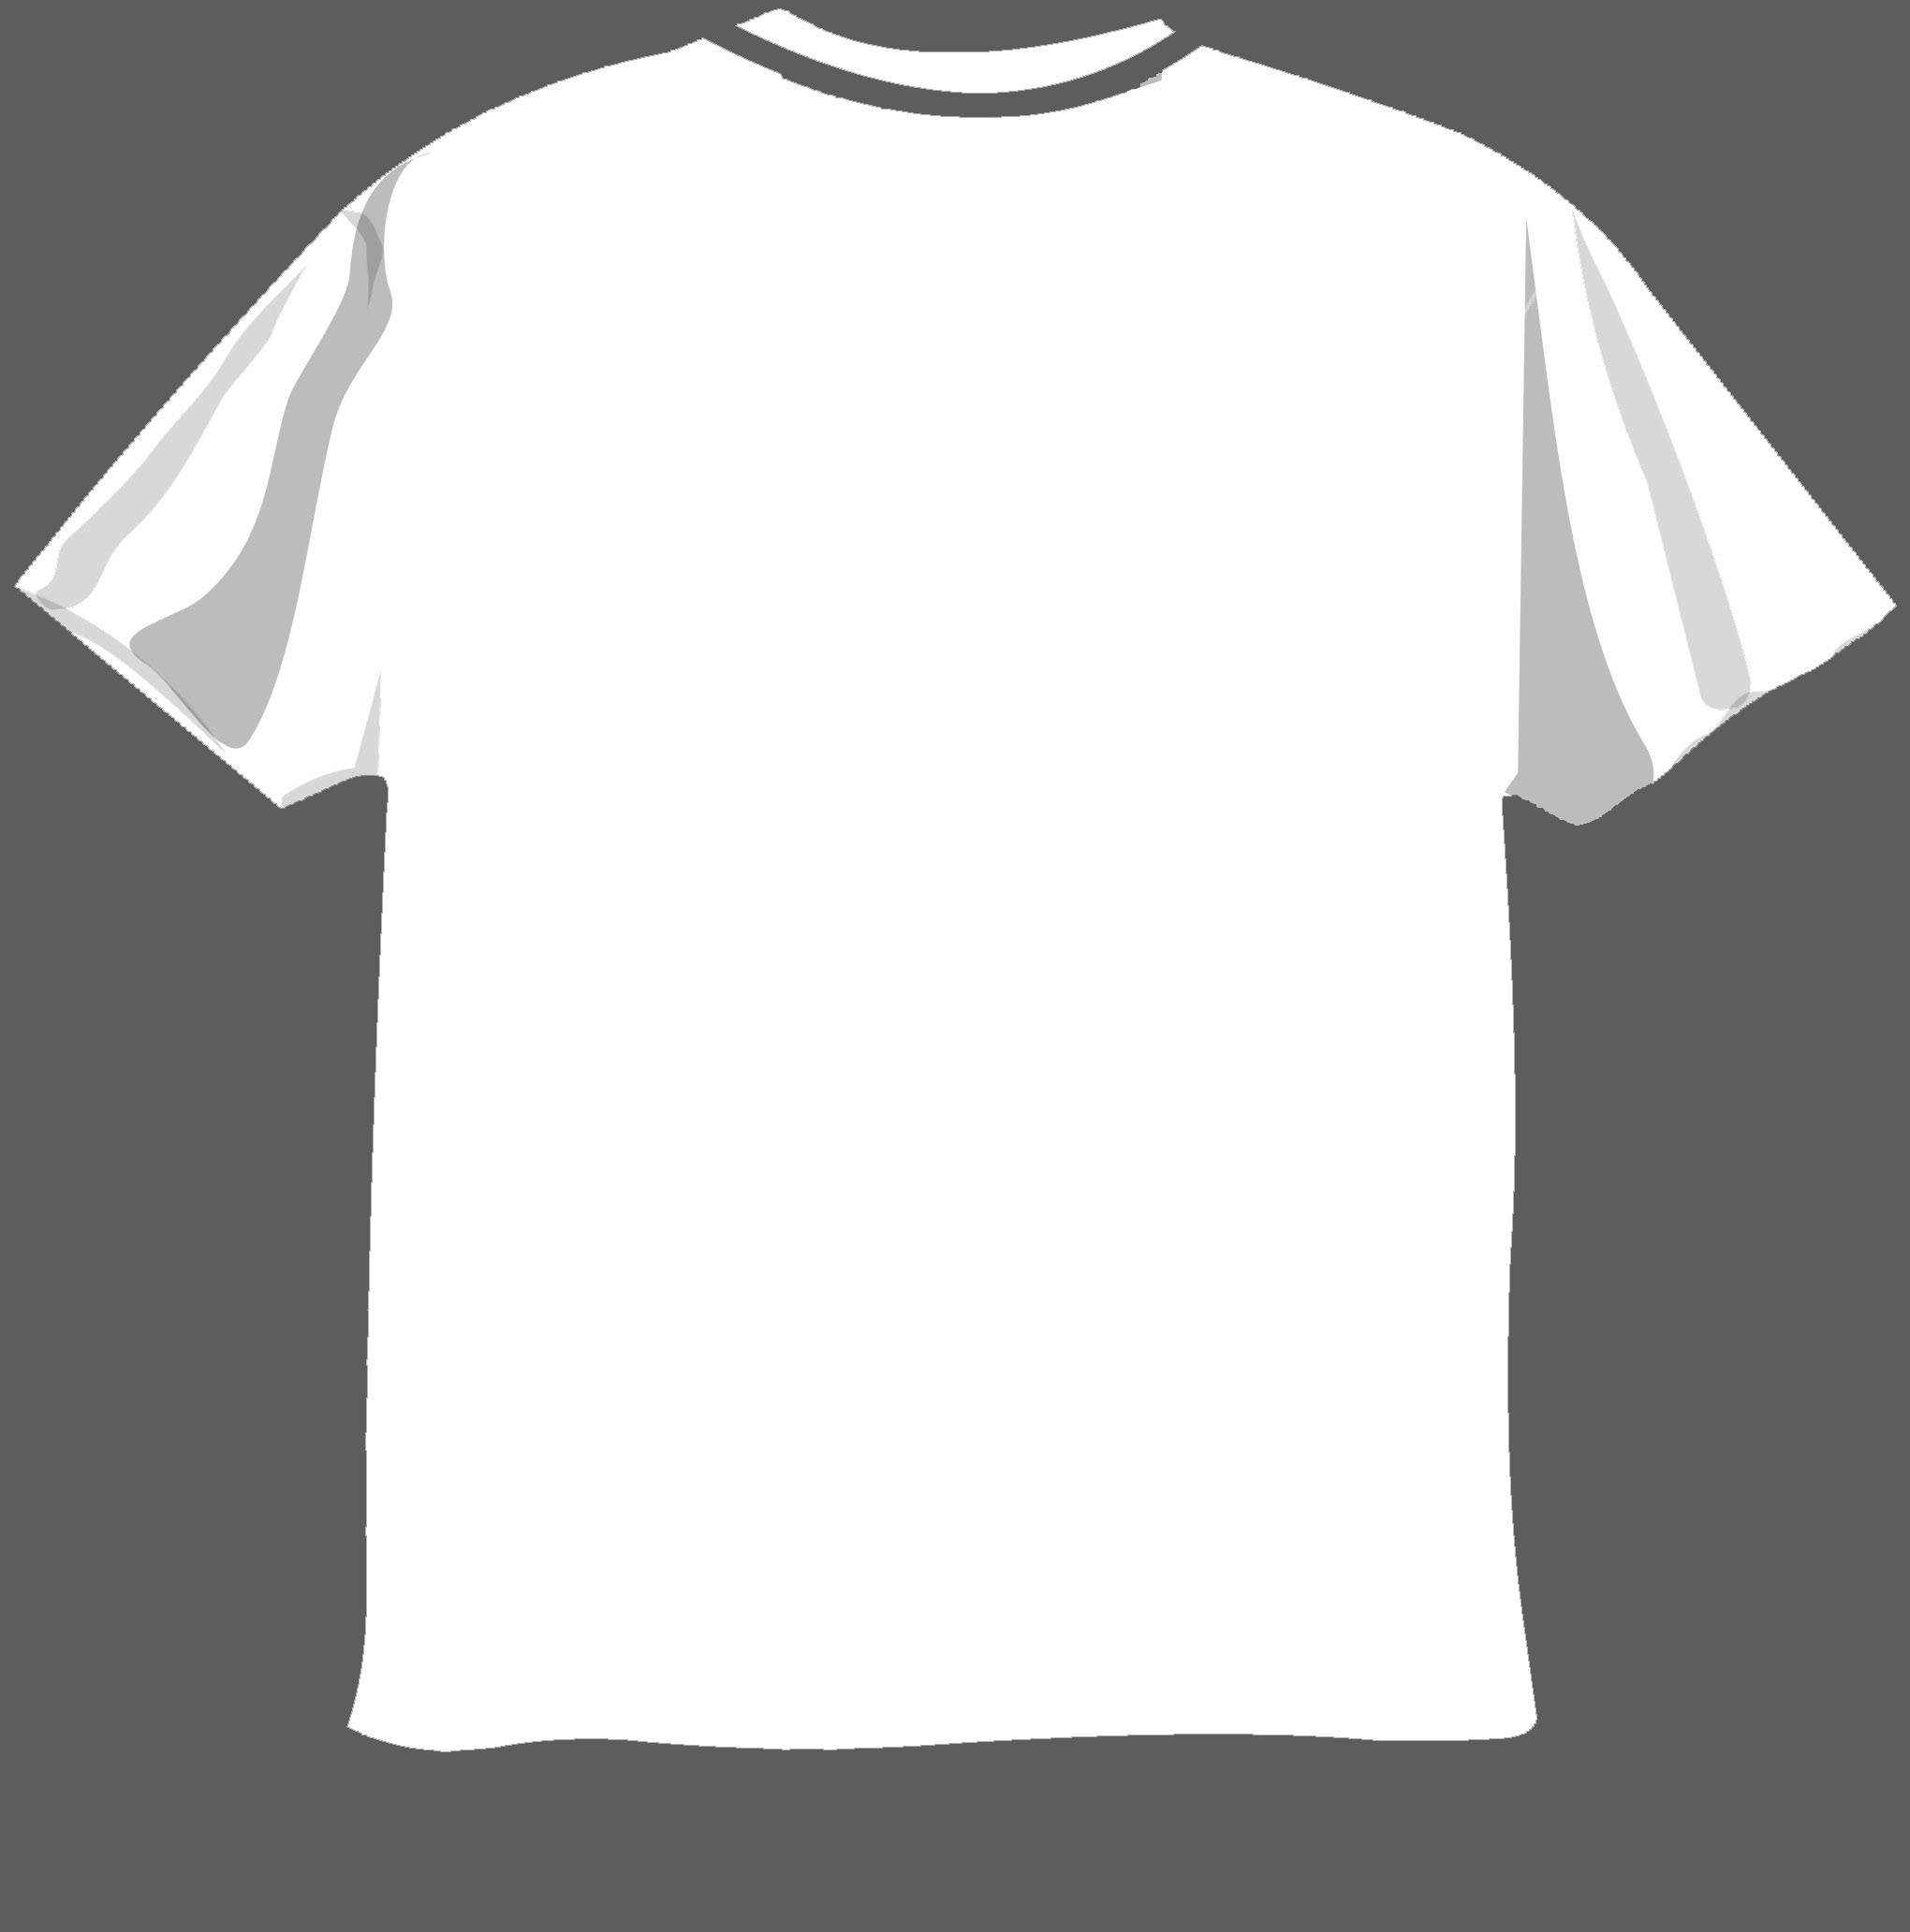 20 T Shirt Design Template Photoshop Images – Shirt Design Within Blank T Shirt Design Template Psd